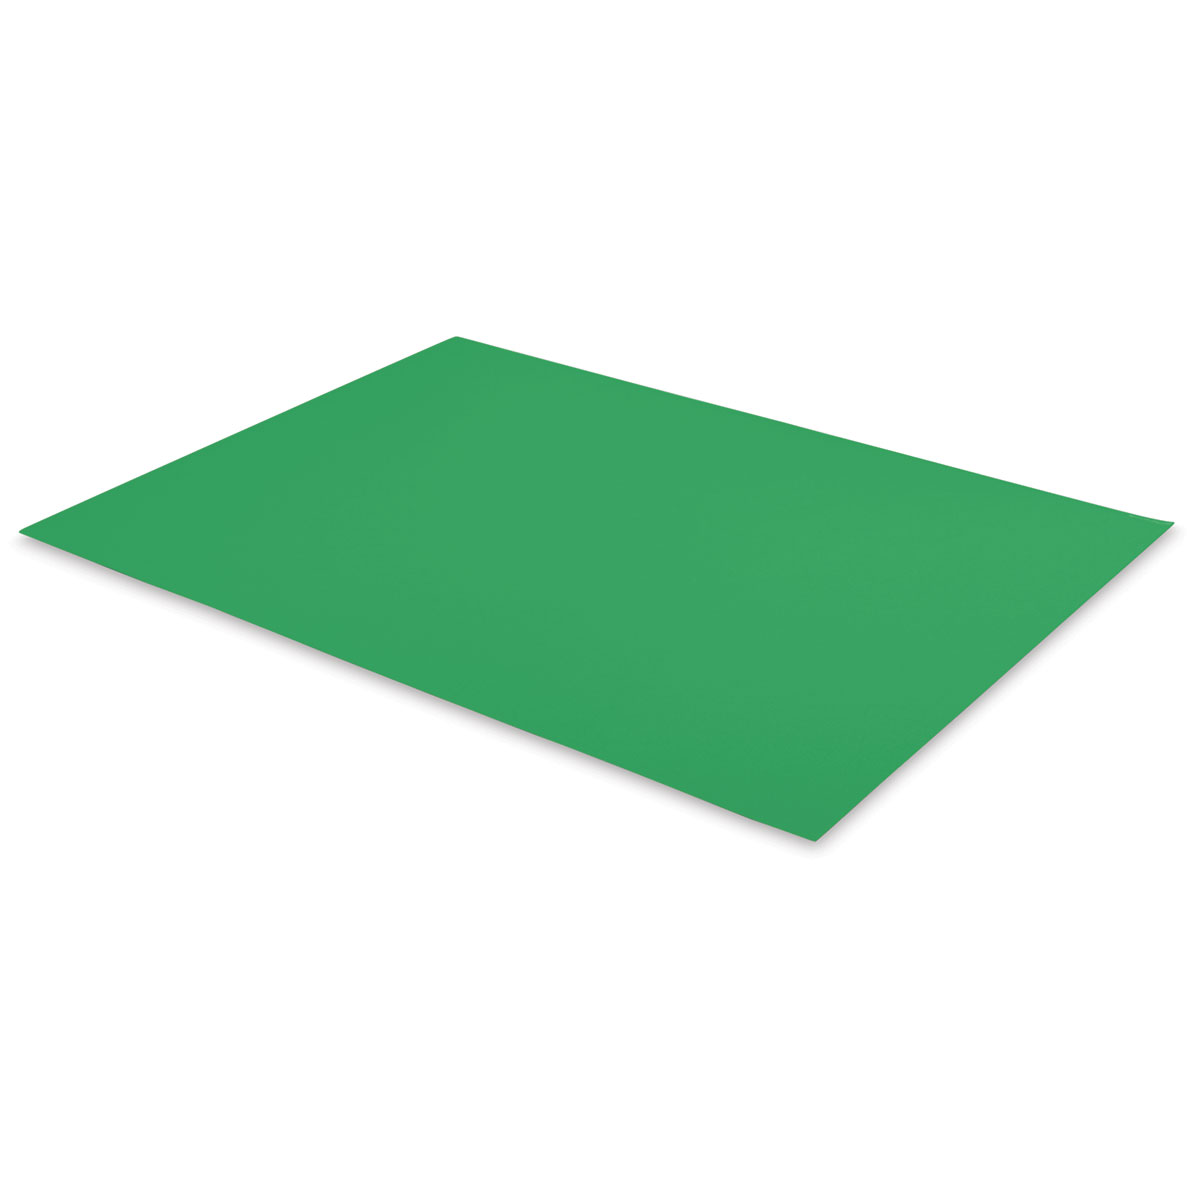 Blick Premium Construction Paper - 19-1/2 x 27-1/2, Lilac, Single Sheet